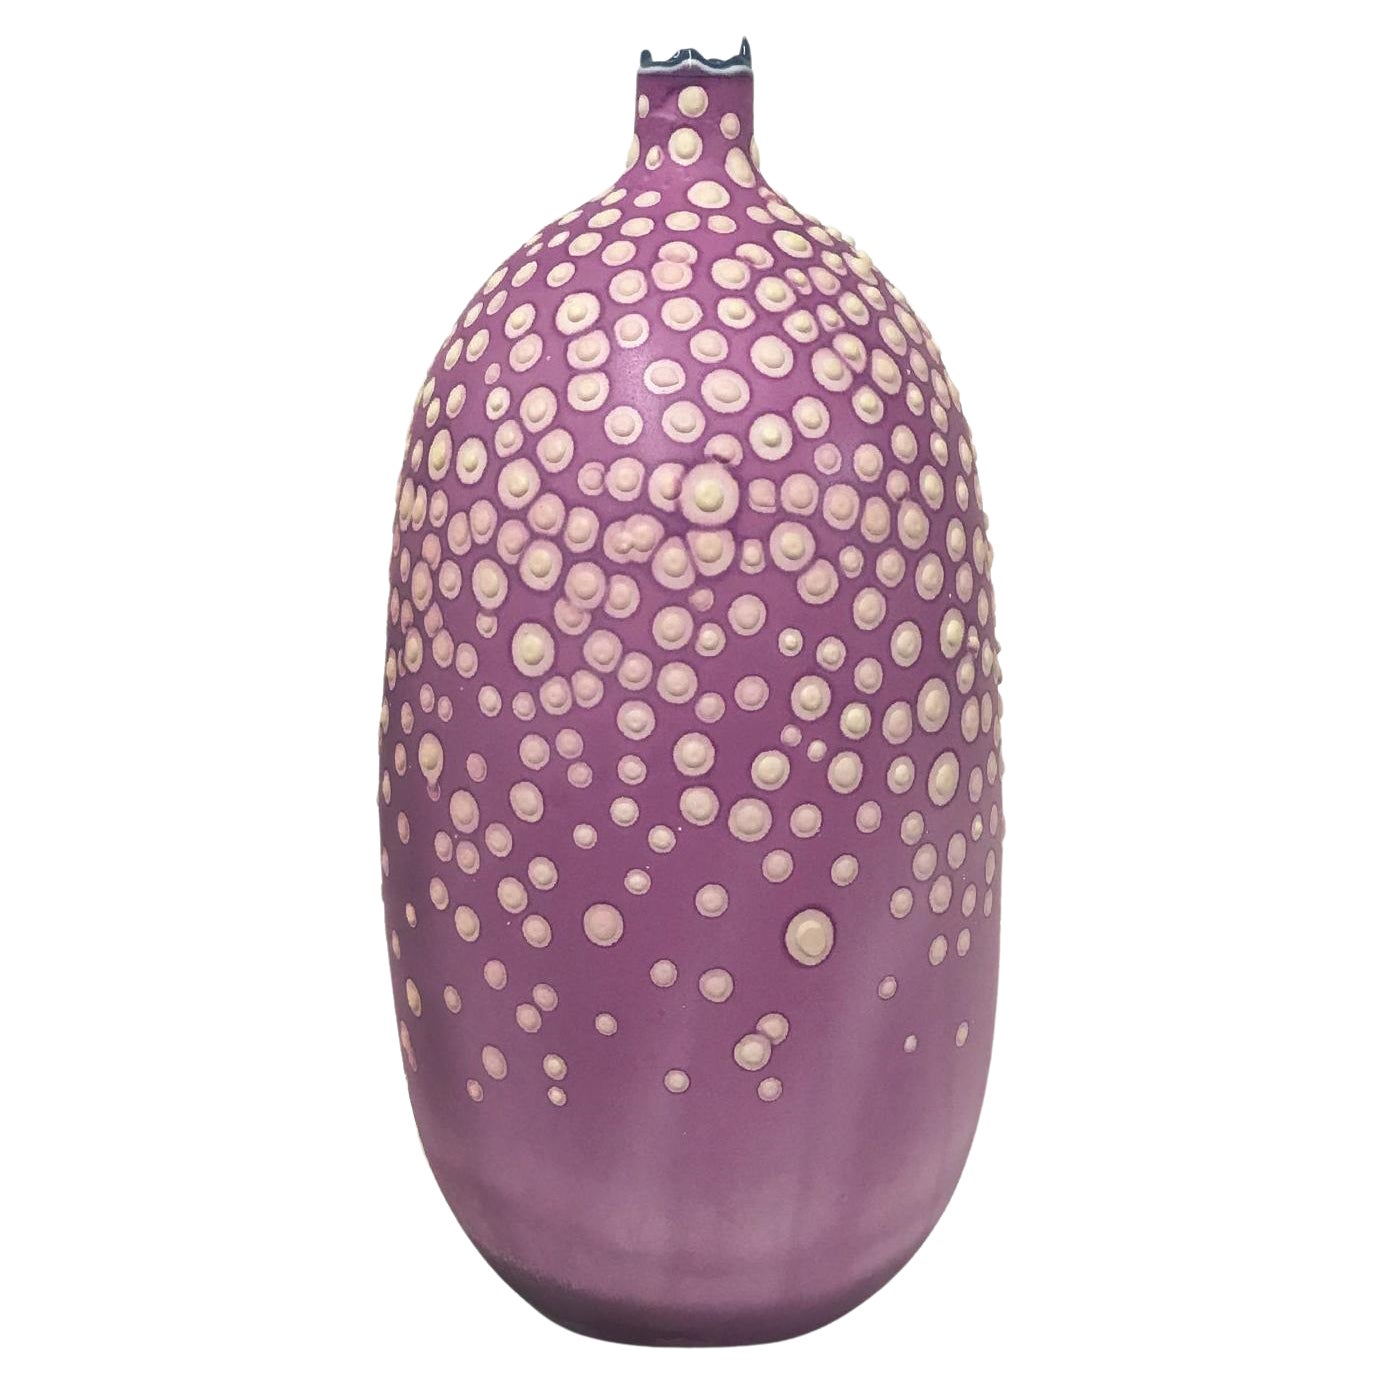 Orchideen- Huxley-Vase von Elyse Graham